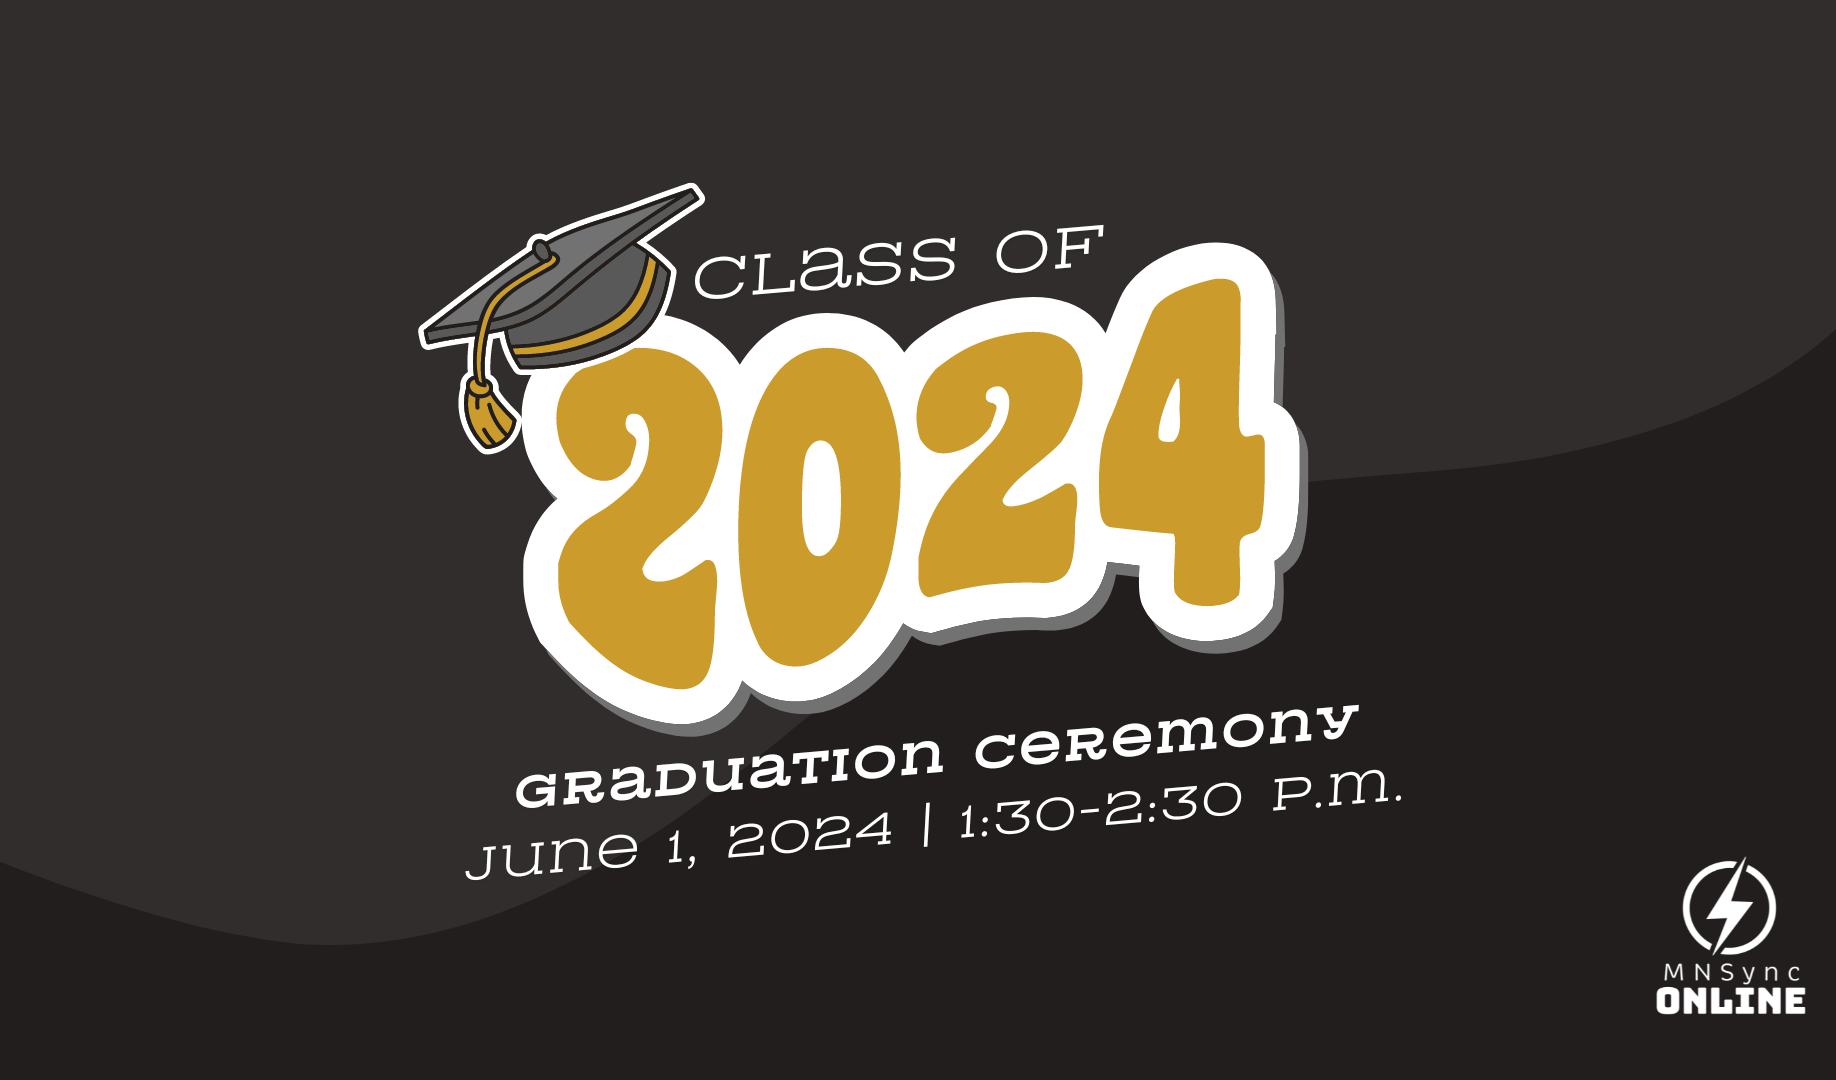 MNSync Online class of 2024 Graduation